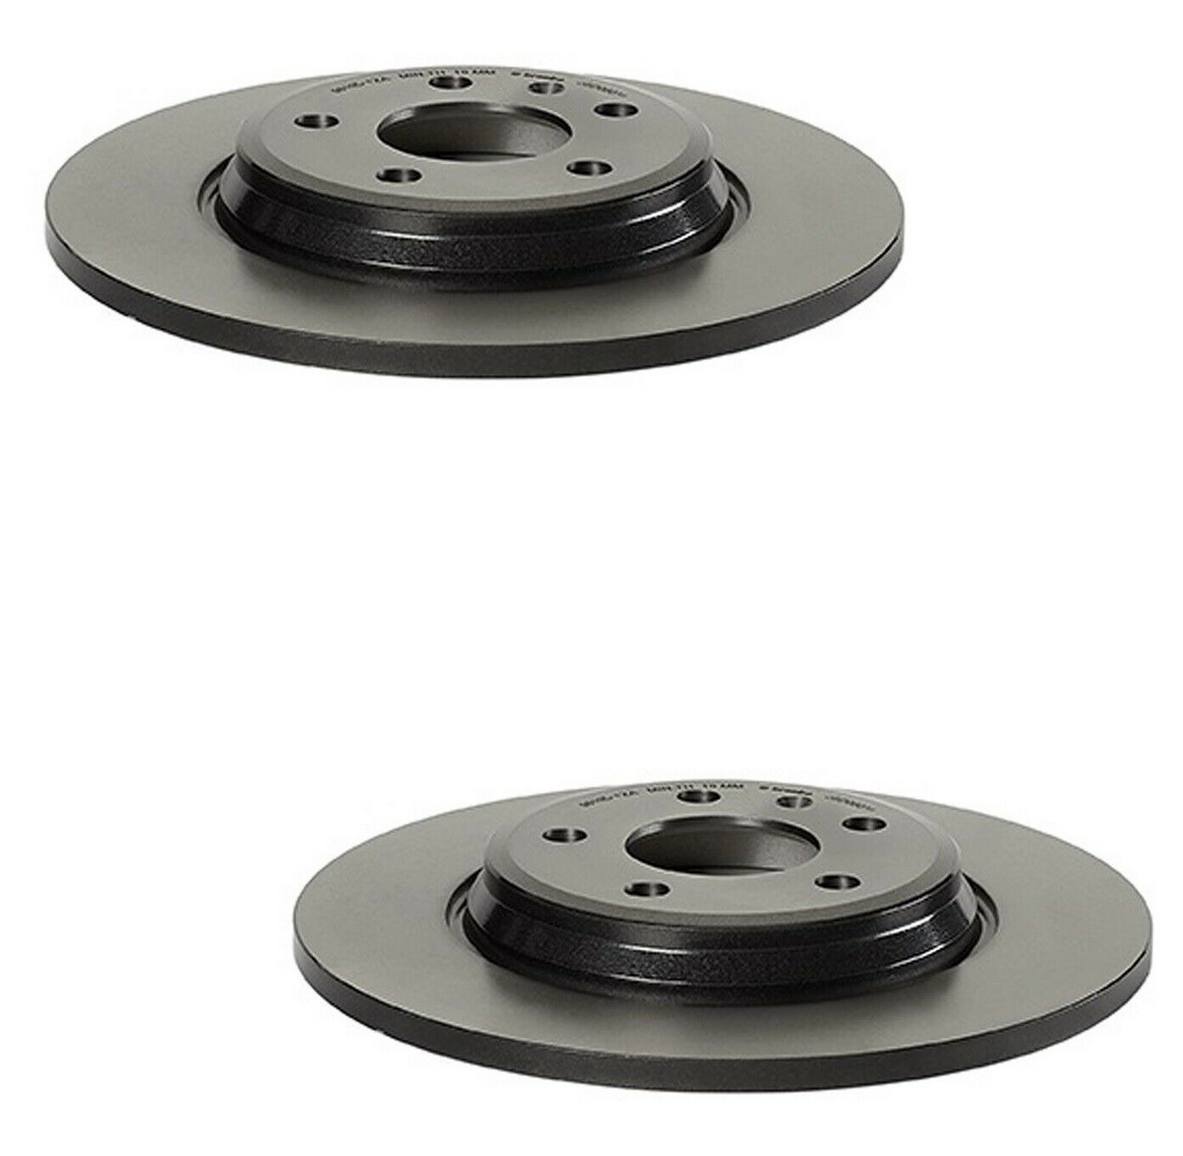 Brembo Brakes Kit - Pads and Rotors Rear (300mm) (Ceramic)